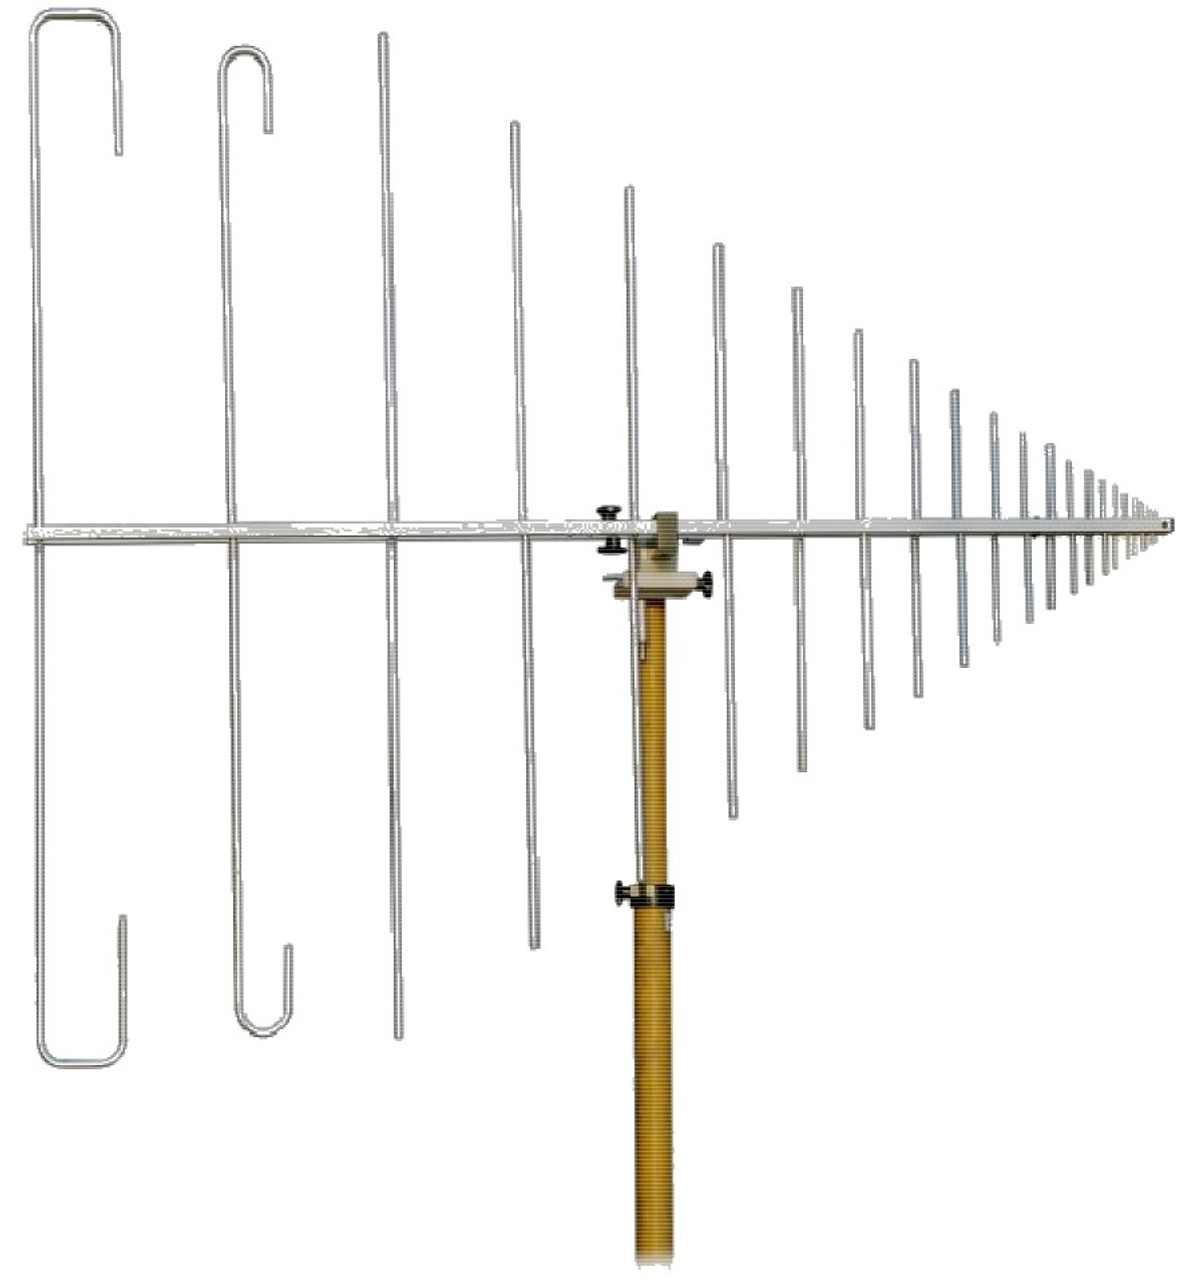 Schwarzbeck VUSLP 9111 F Demountable Logarithmic Periodic Broadband Antenna